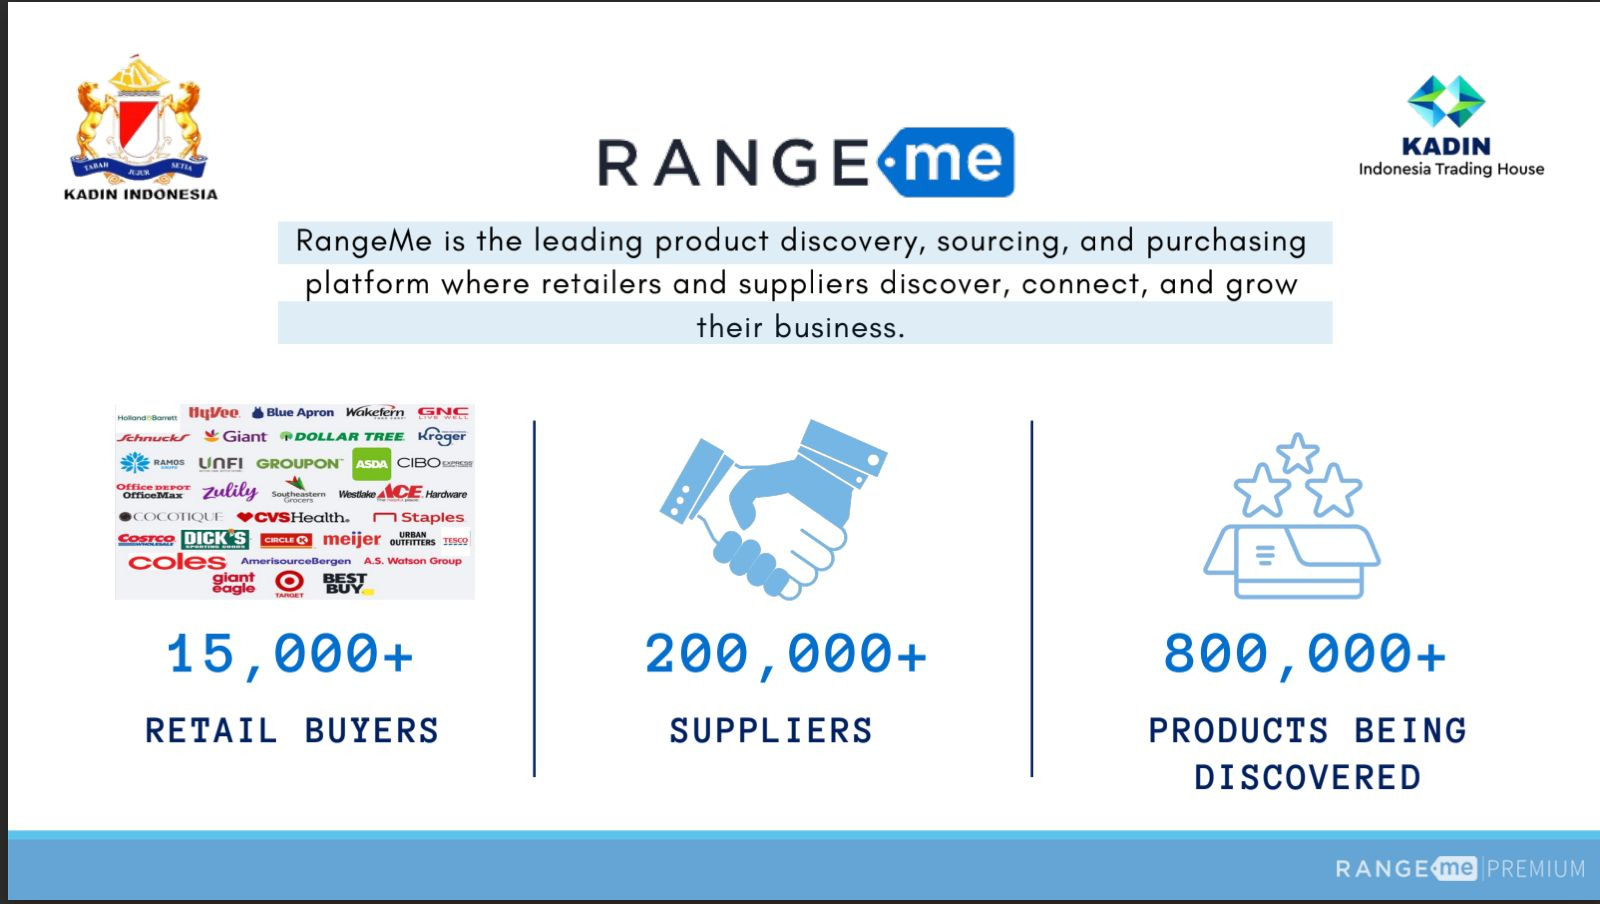 Kolaborasi Kadin Indonesia Trading House dengan RangeMe untuk Perluasan Pasar Global melalui Digitalisasi